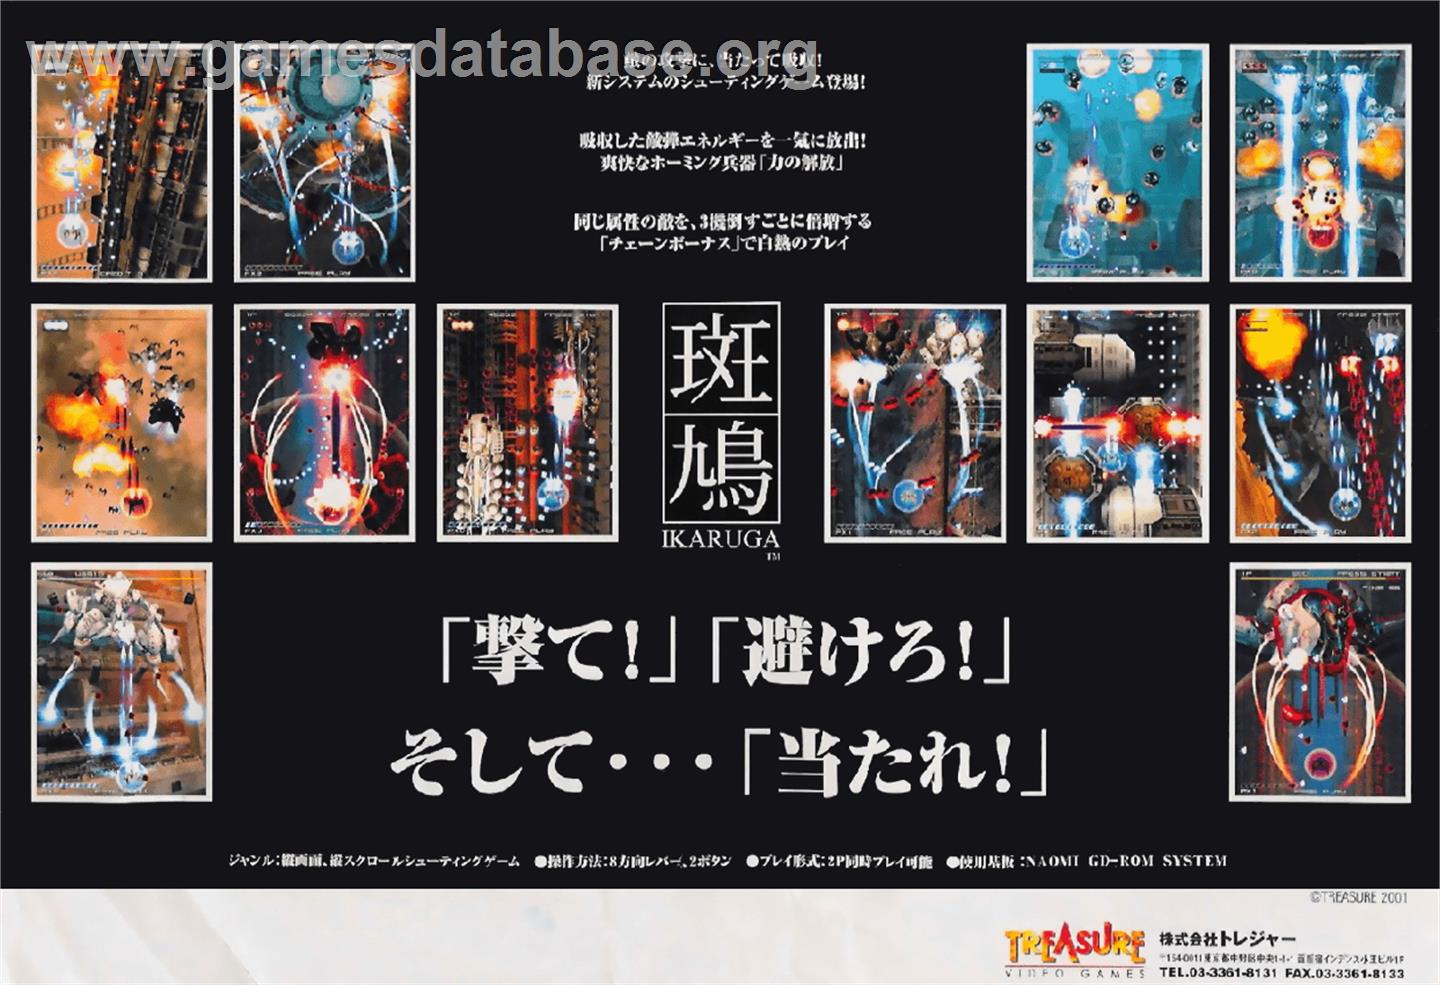 Ikaruga - Sega Dreamcast - Artwork - Advert